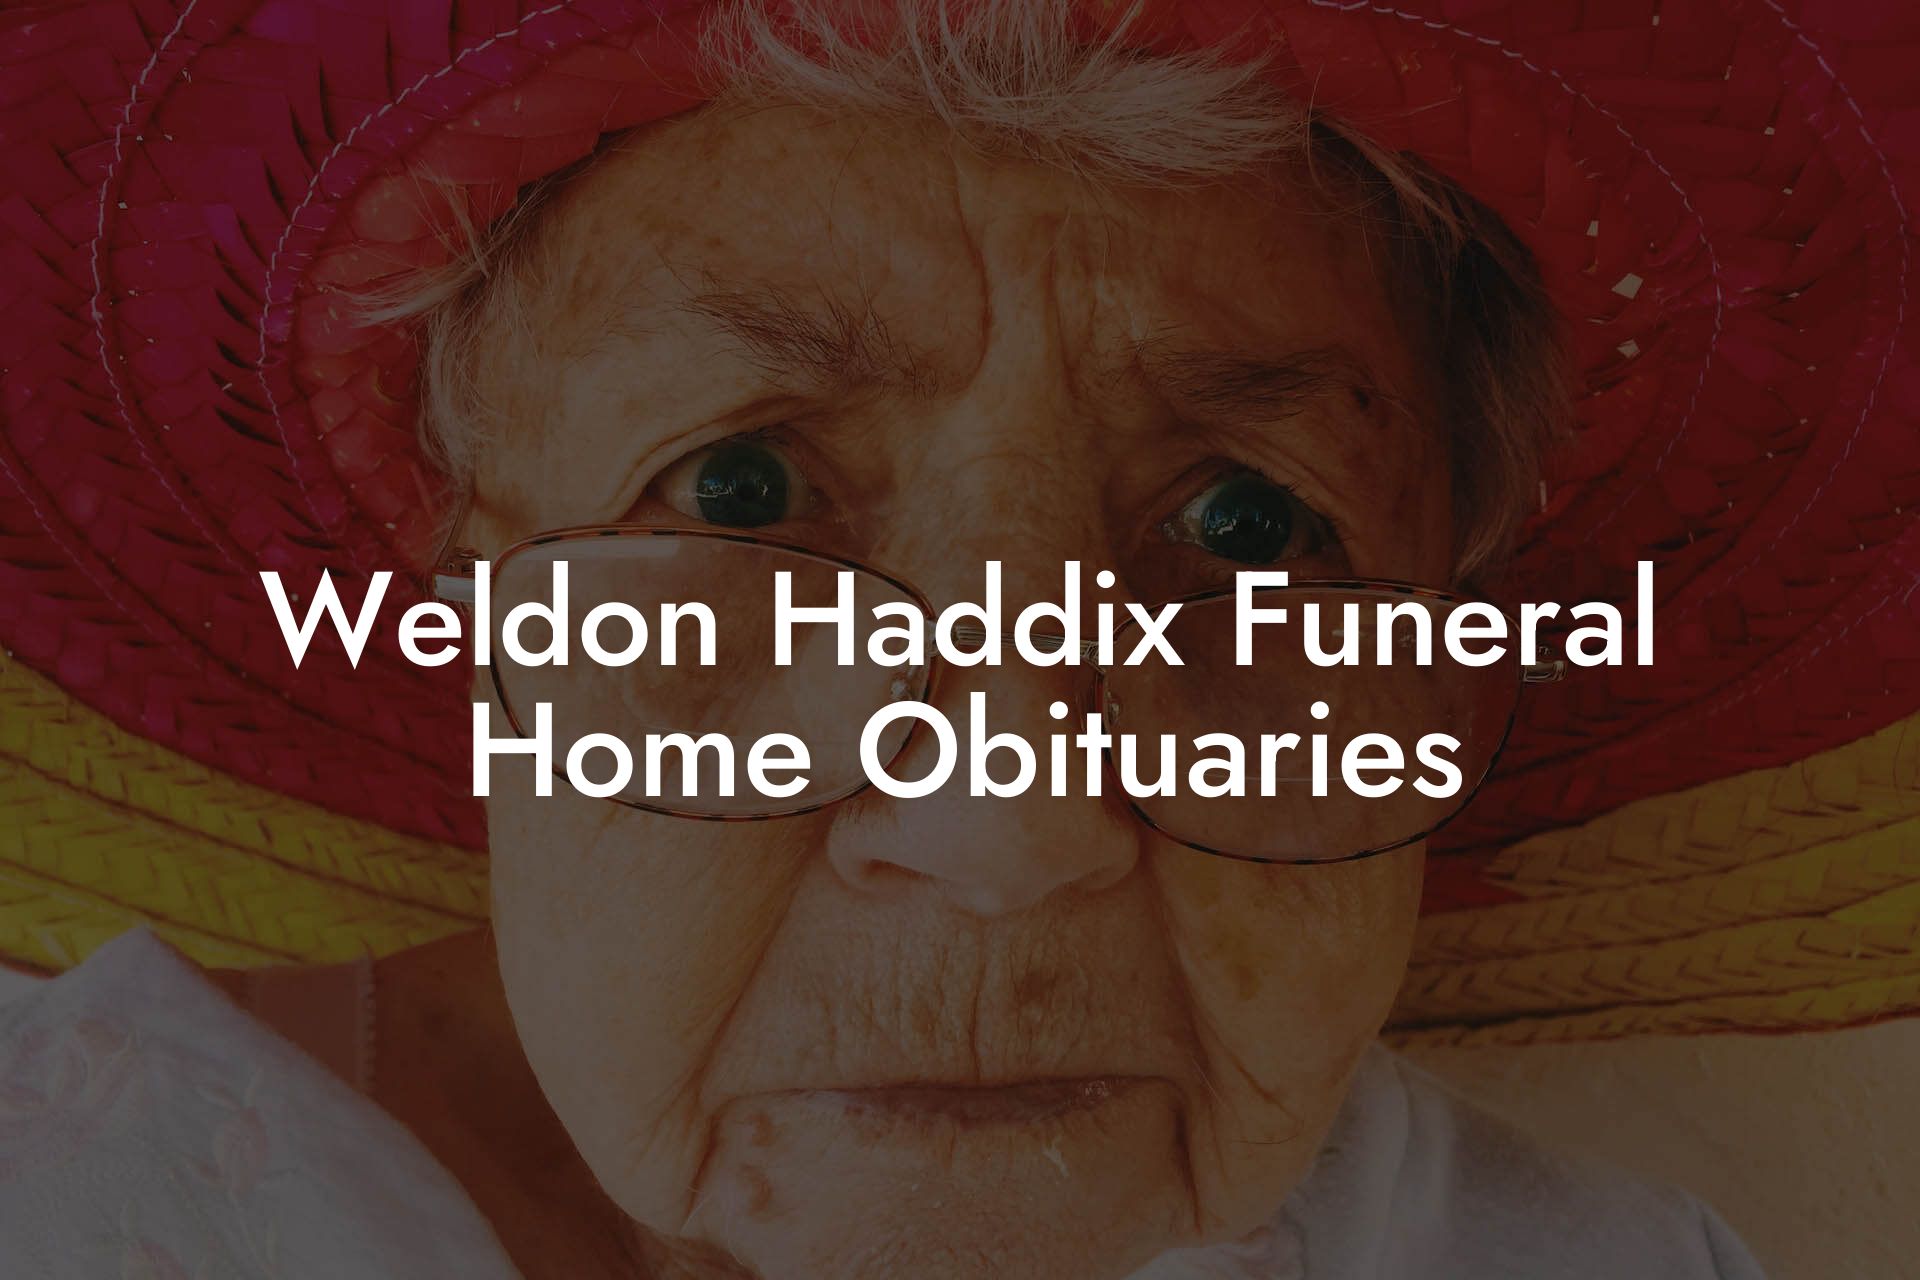 Weldon Haddix Funeral Home Obituaries